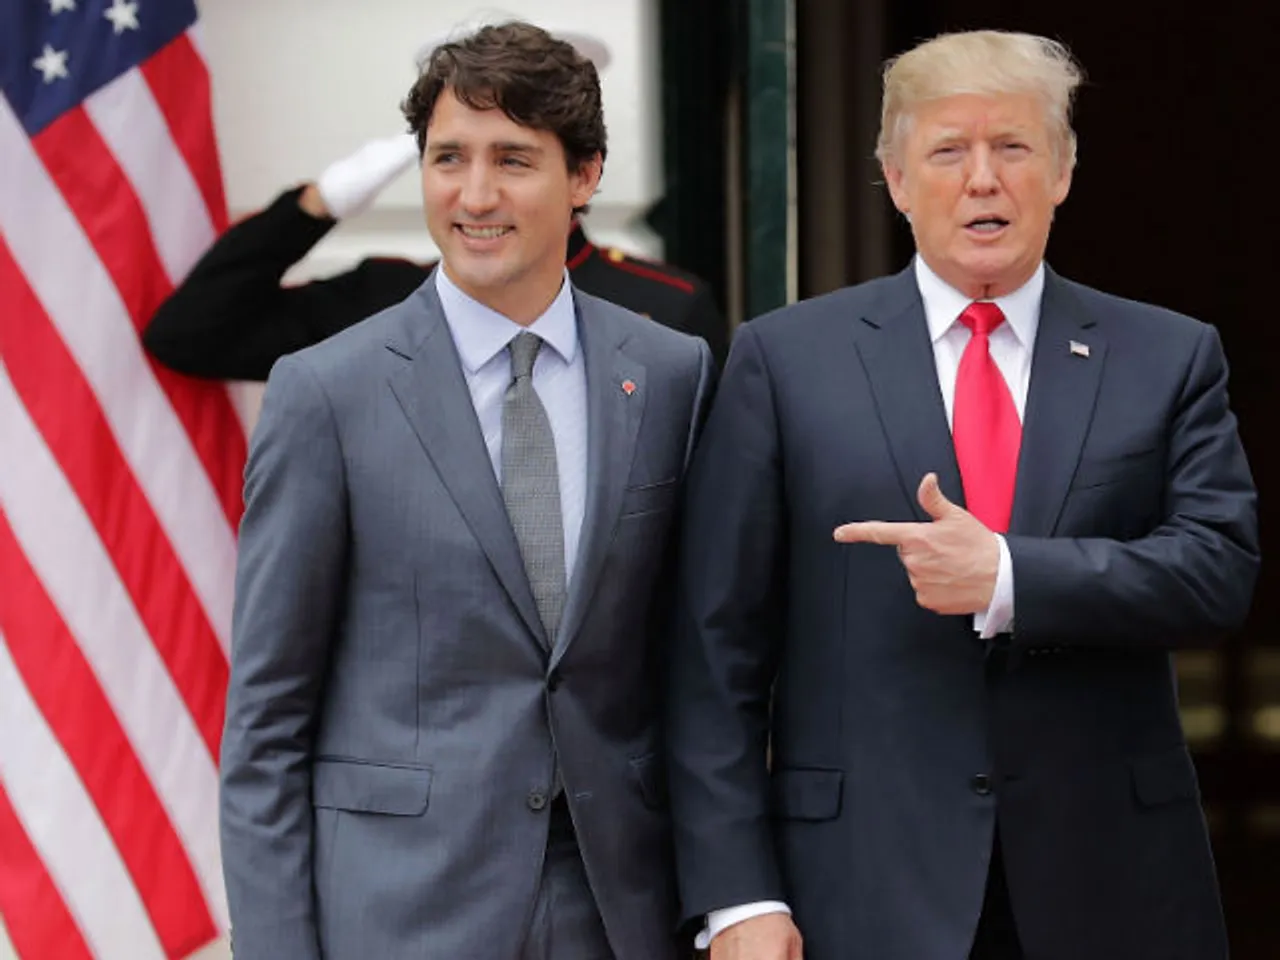 NAFTA challenge: Restore momentum after Trump's latest 'bullying'